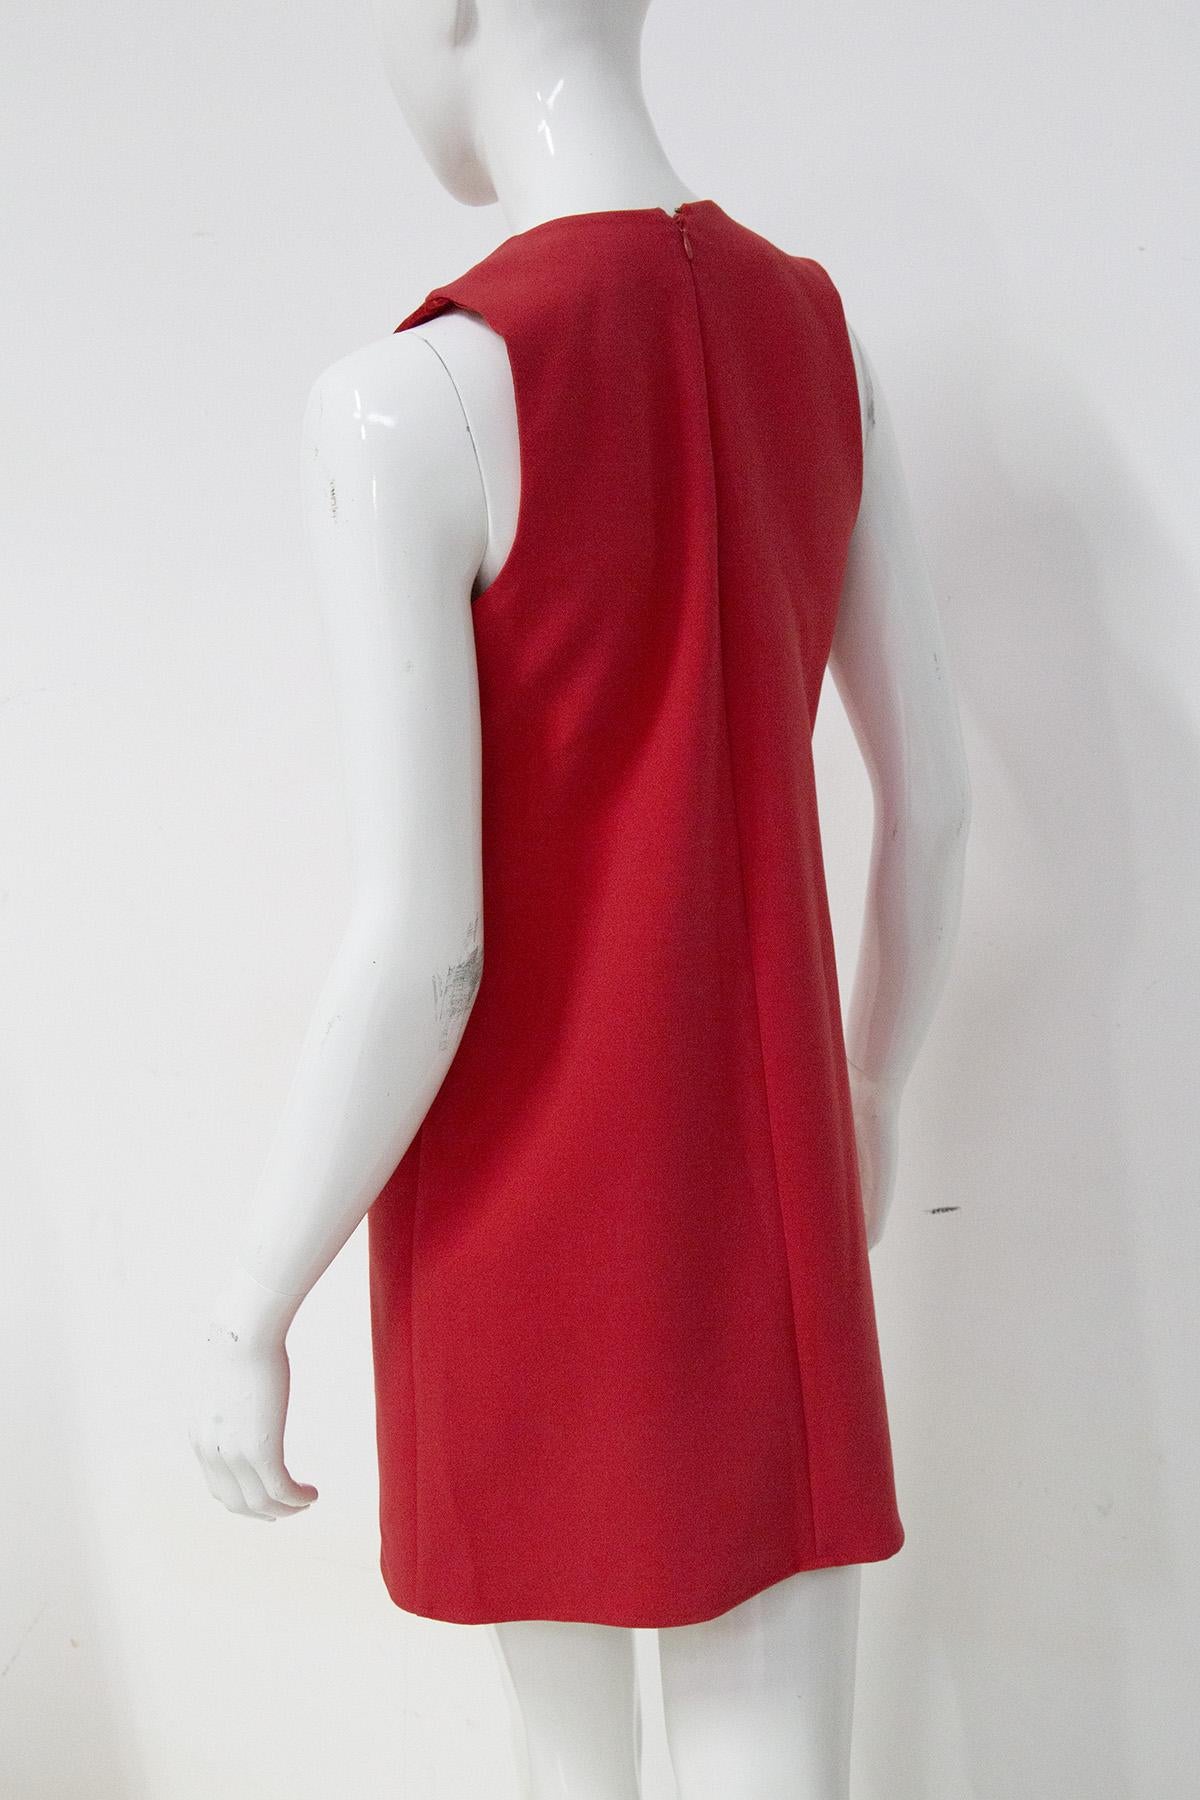 Elisabetta Franchi Aesthetic Day Dress For Sale 7